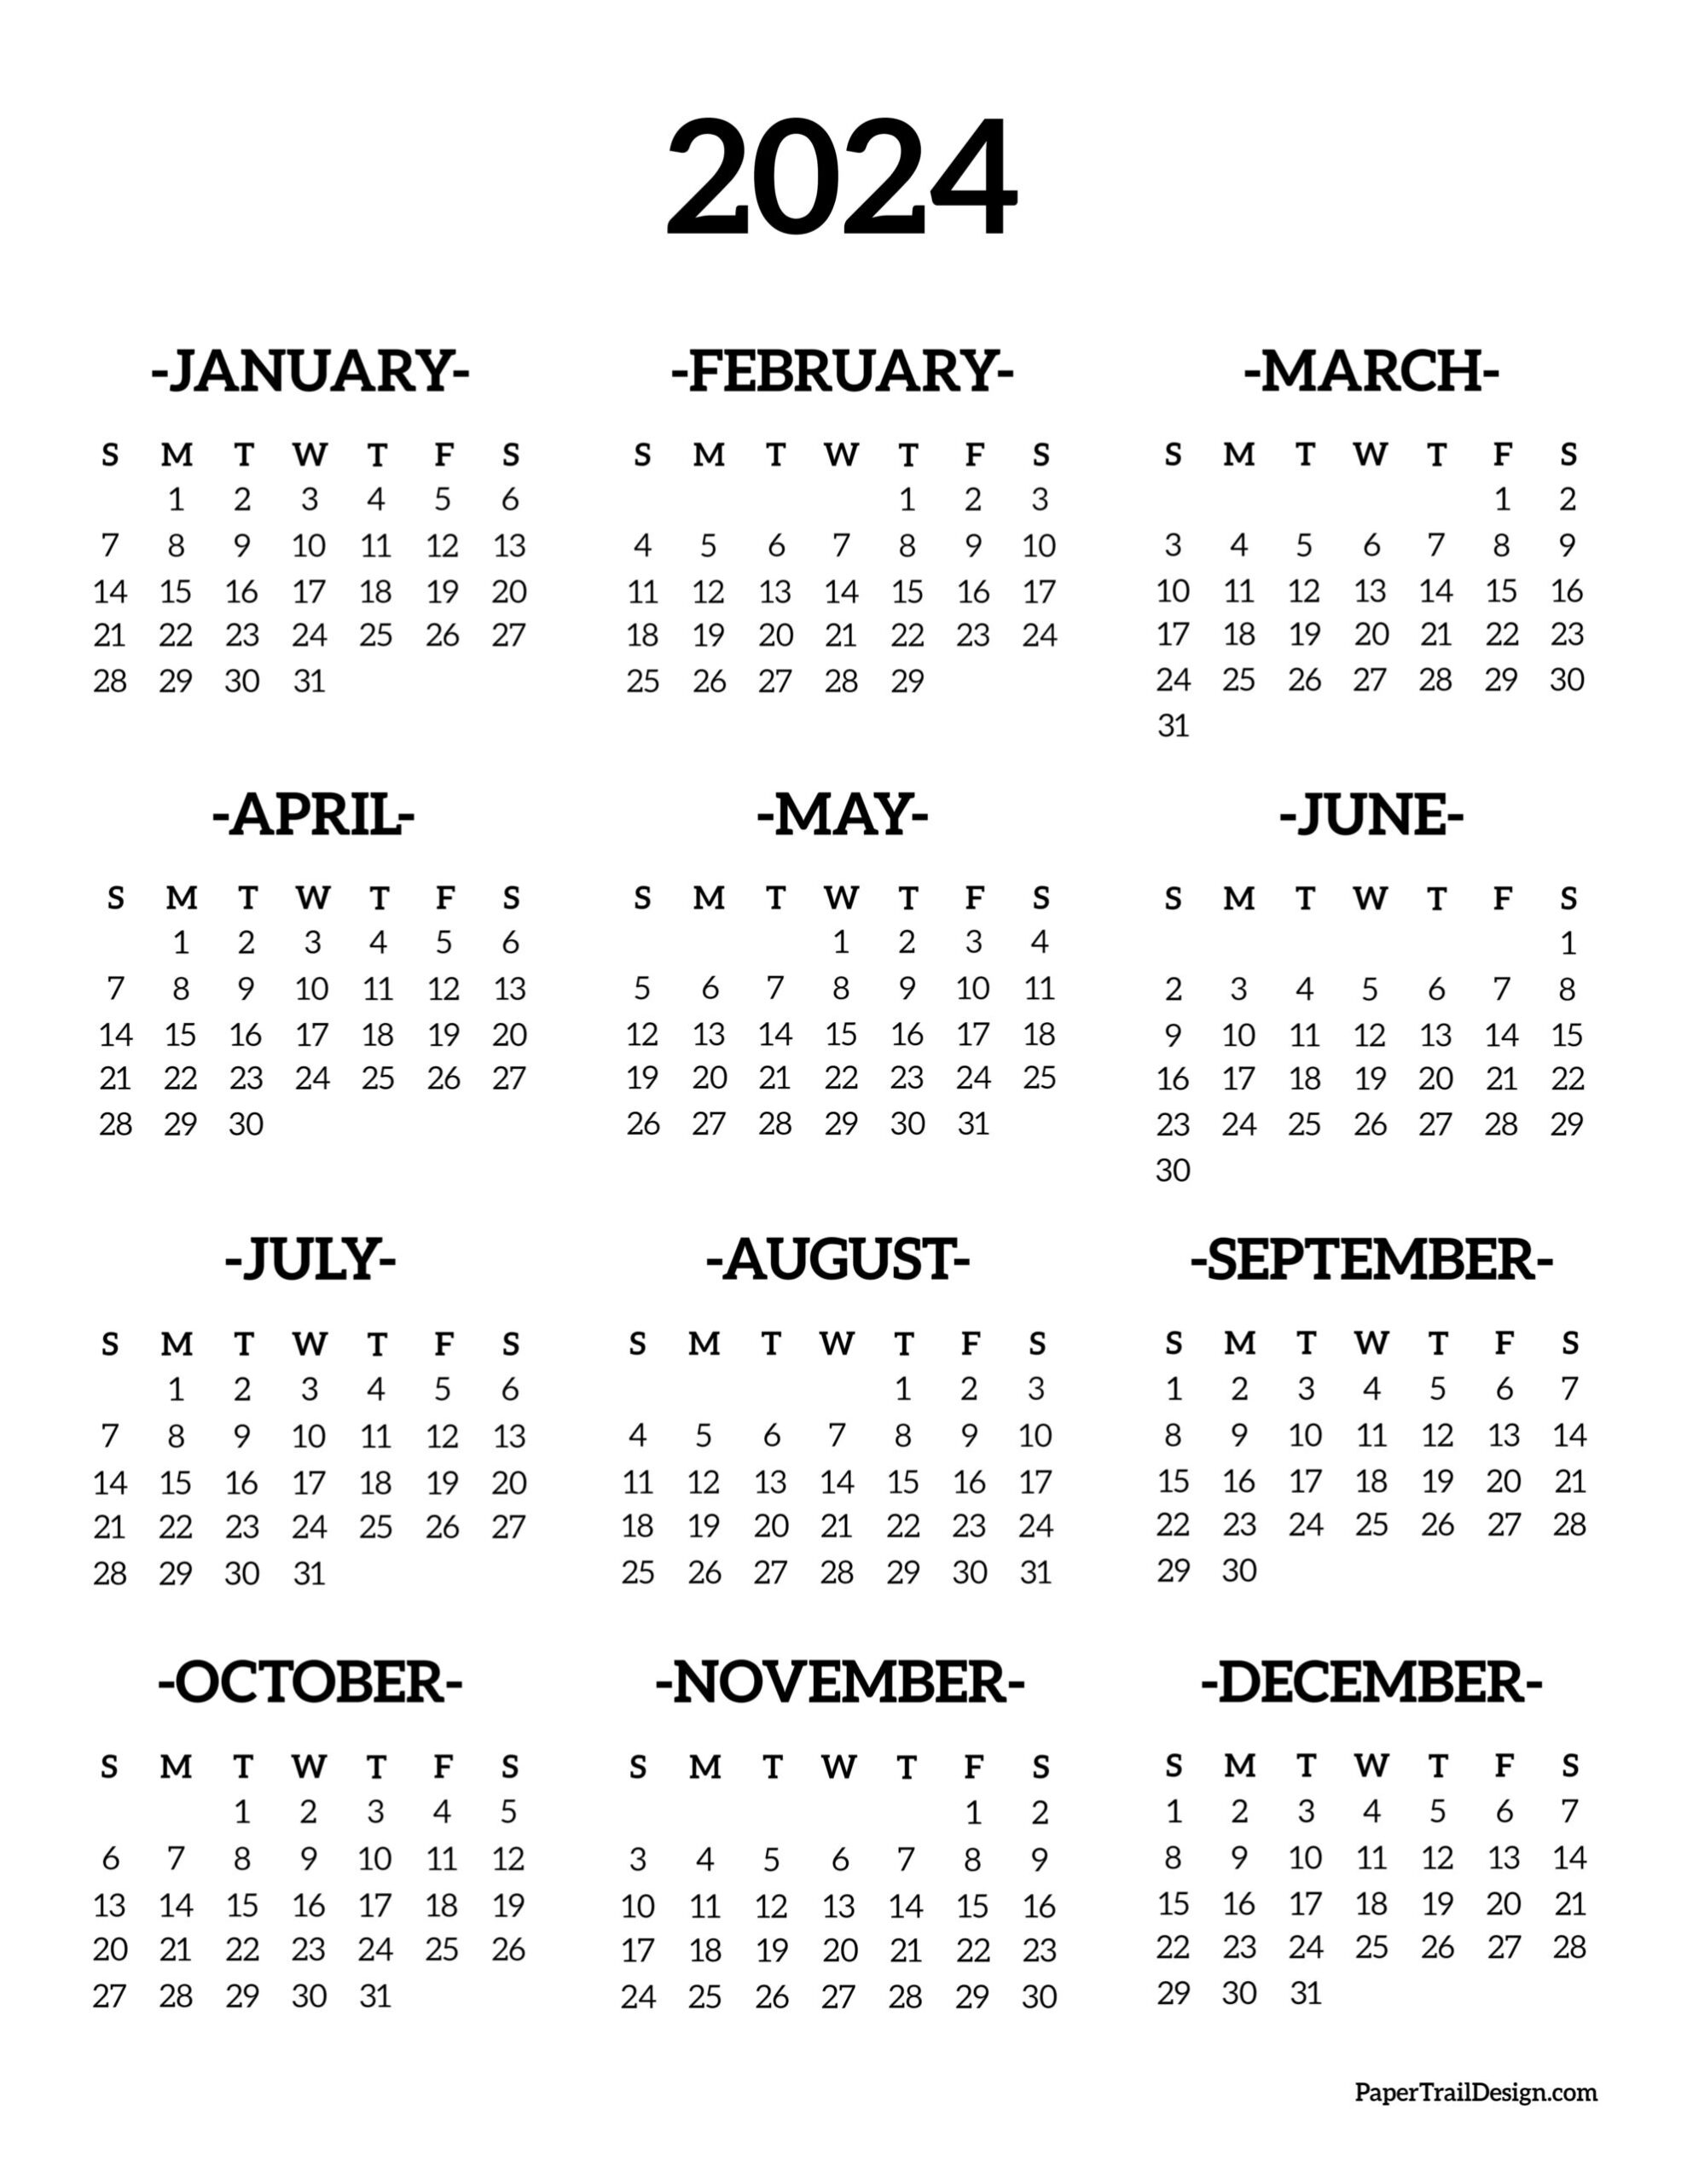 Calendar 2024 Printable One Page - Paper Trail Design | Free Printable Calendar 2024